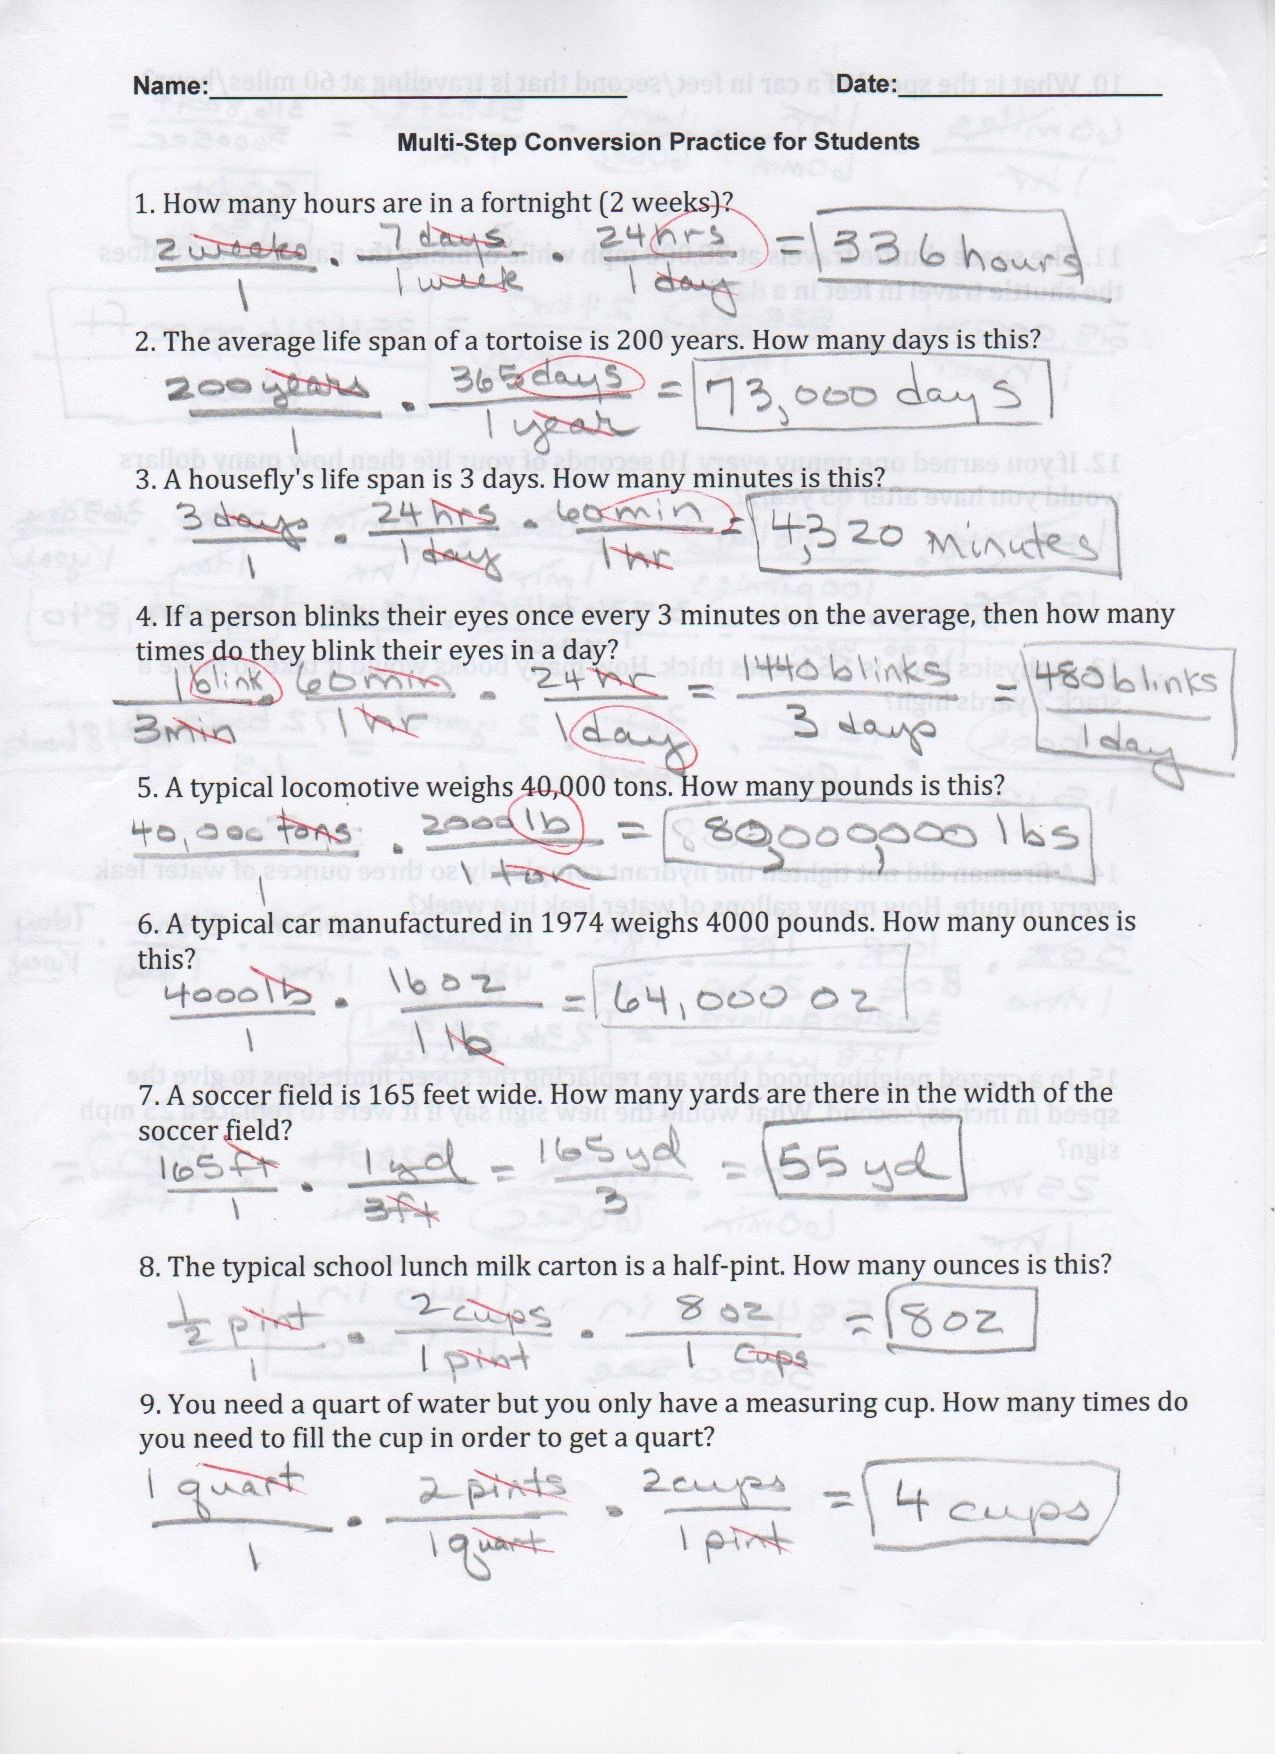 Dimensional Analysis Worksheet Chemistry 29 Chemistry Dimensional Analysis Worksheet Answers